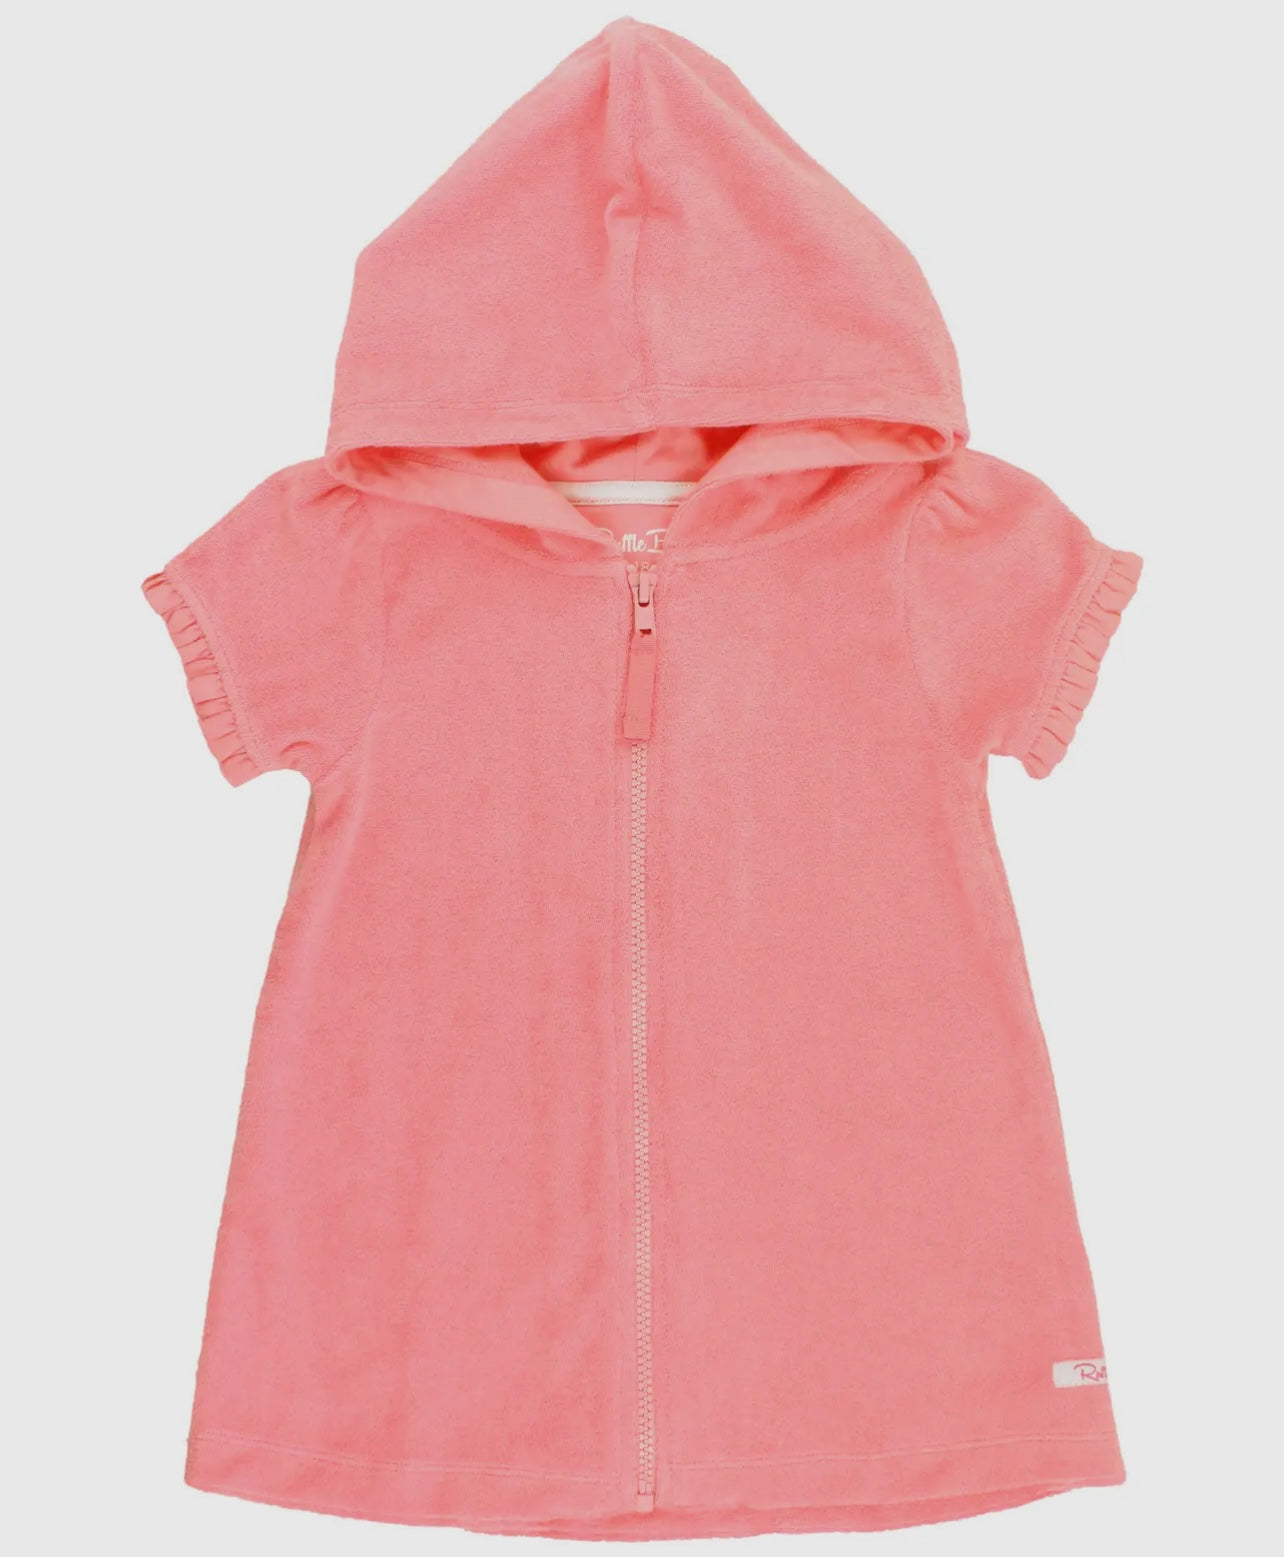 Bubblegum pink full-zip cover-up